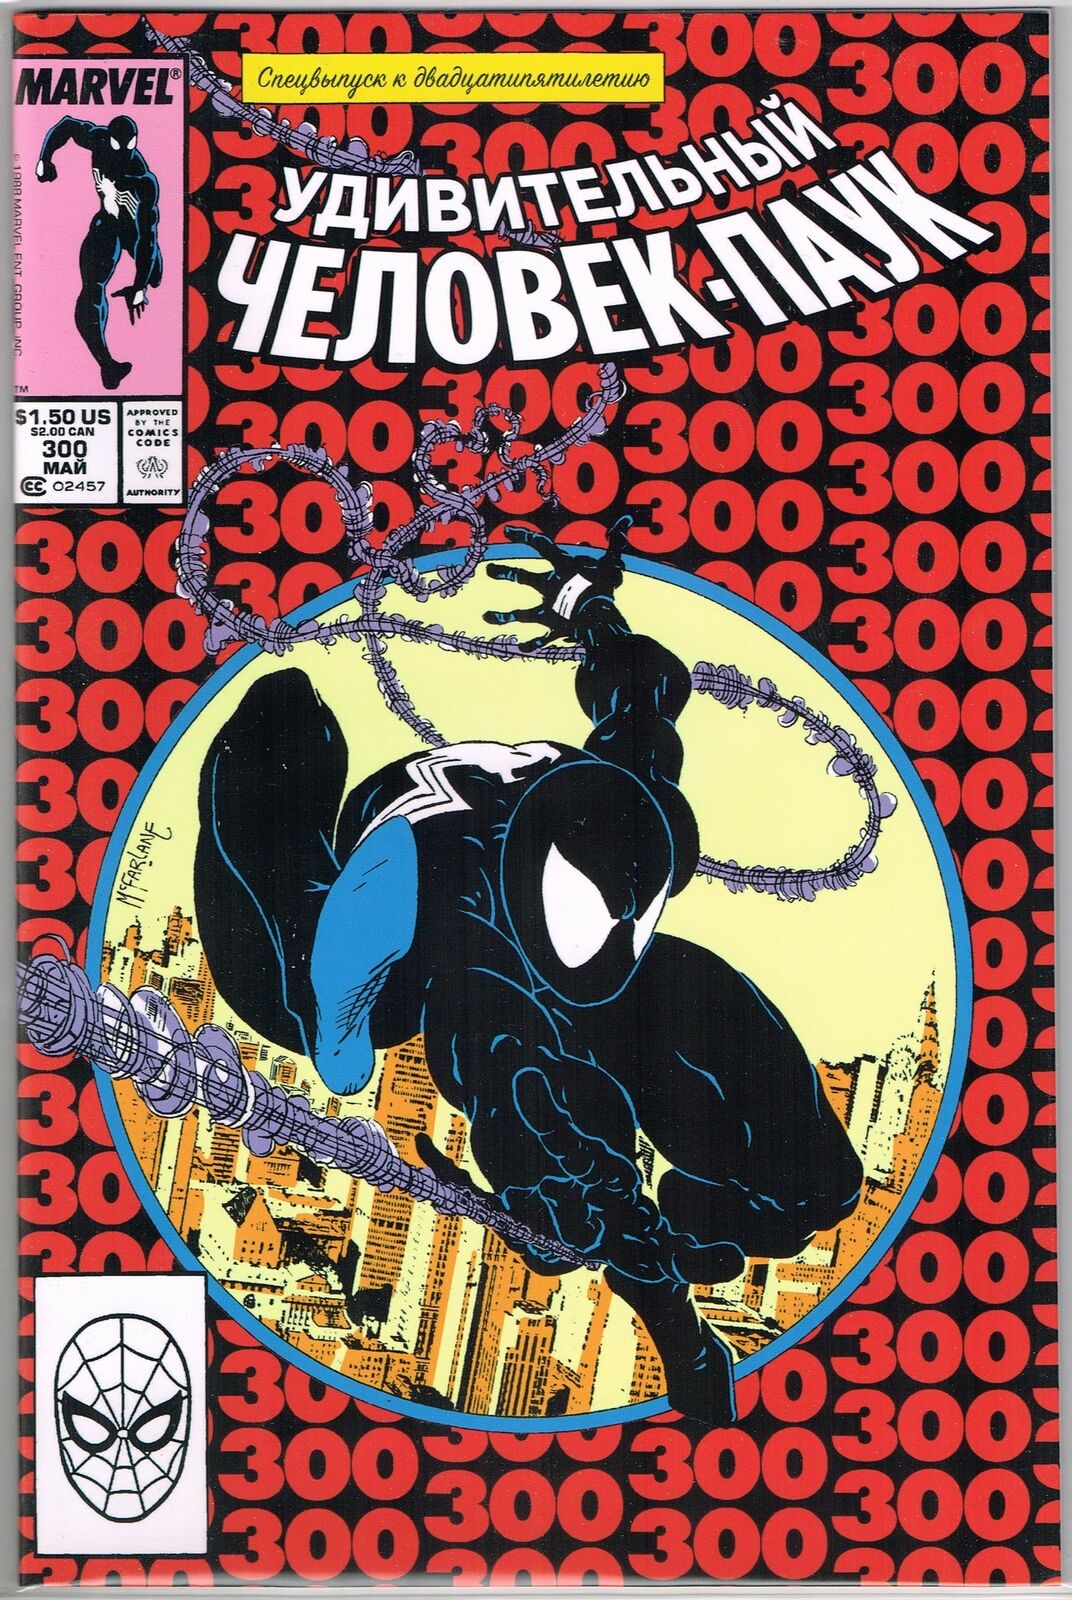 Amazing Spider-Man #300 Russian Edition